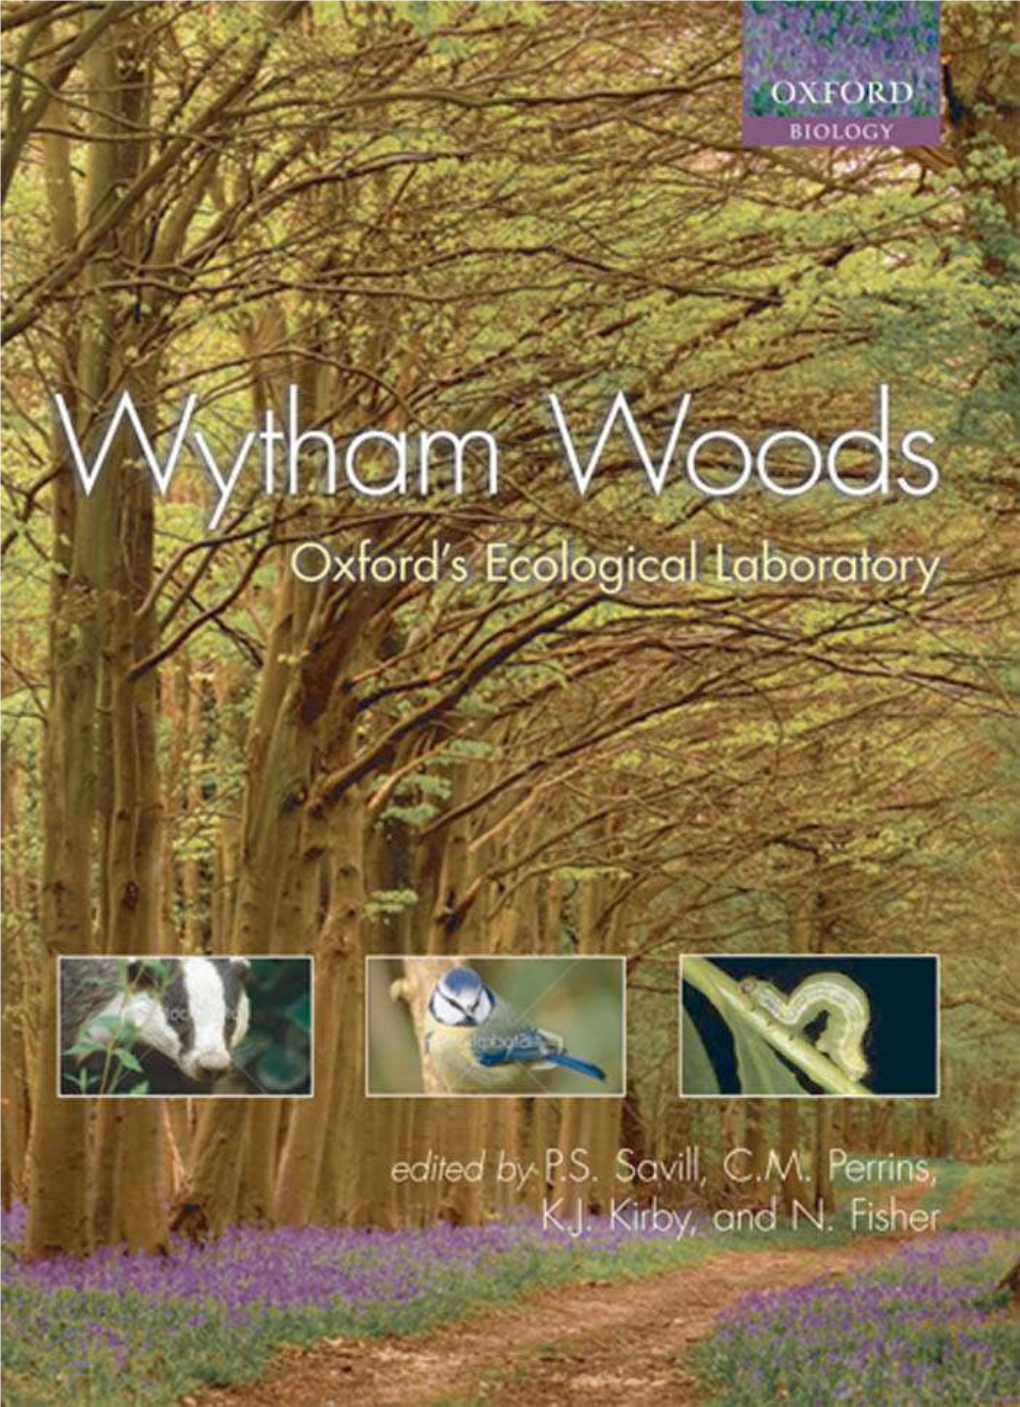 Wytham Woods Oxford's Ecological Laboratory